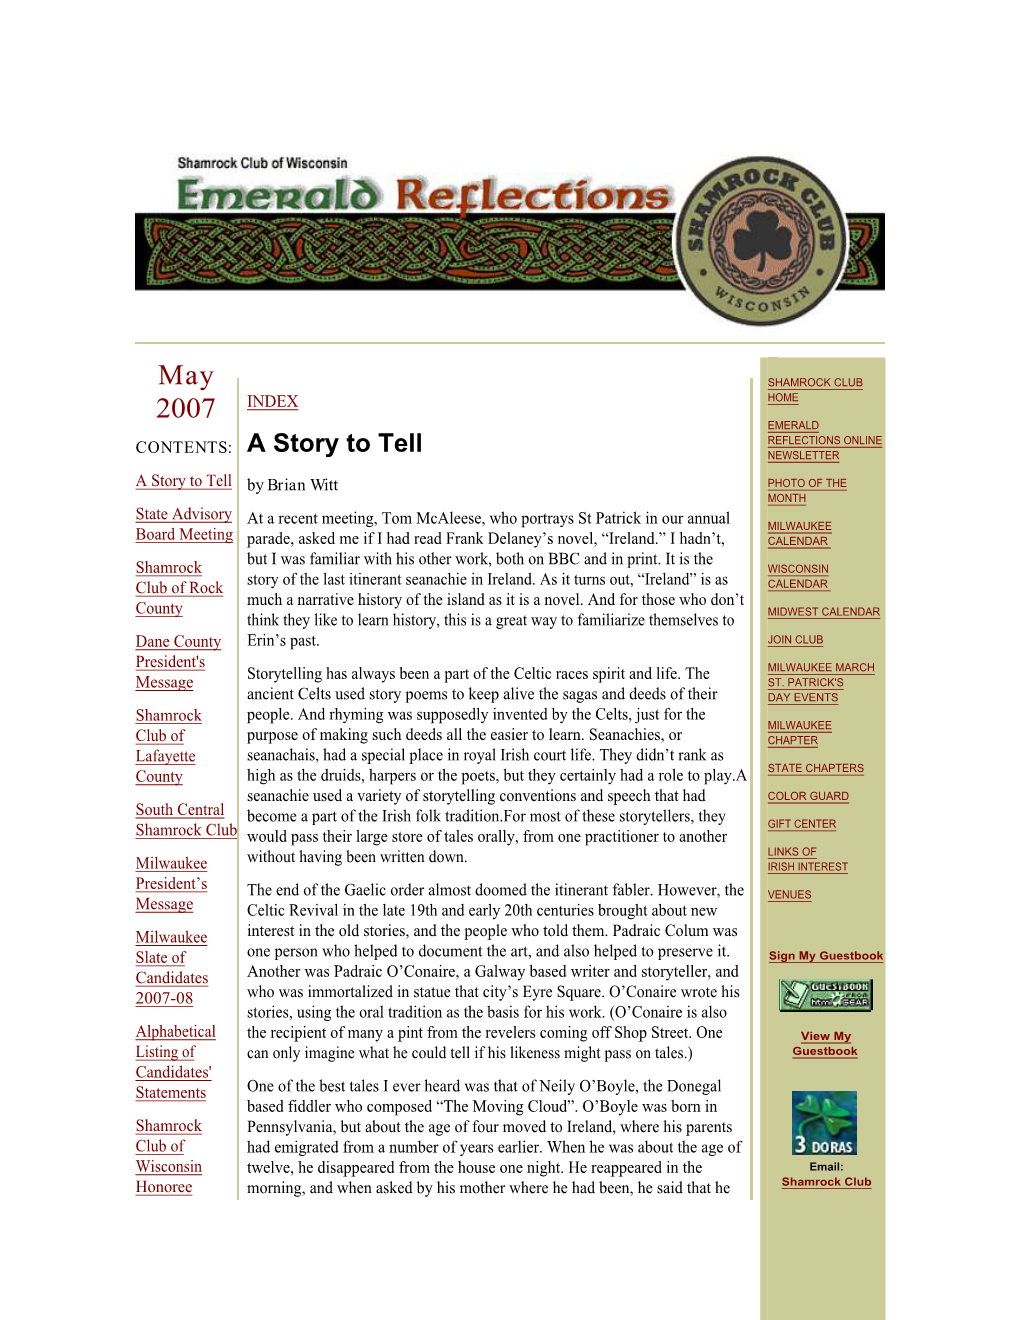 May 2007 Emerald Reflections